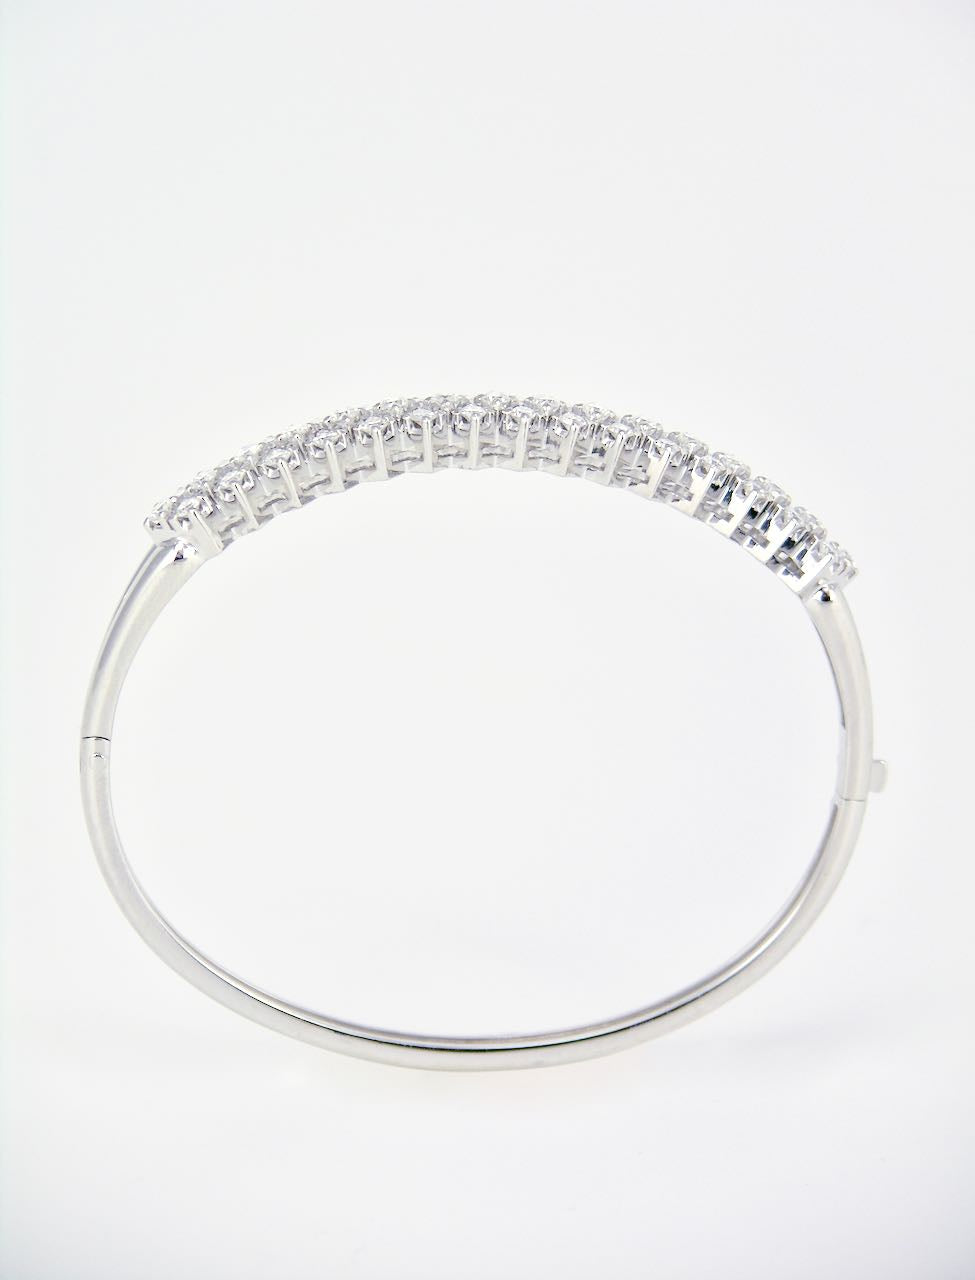 Vintage 18k White Gold Diamond Hinged Bangle Bracelet